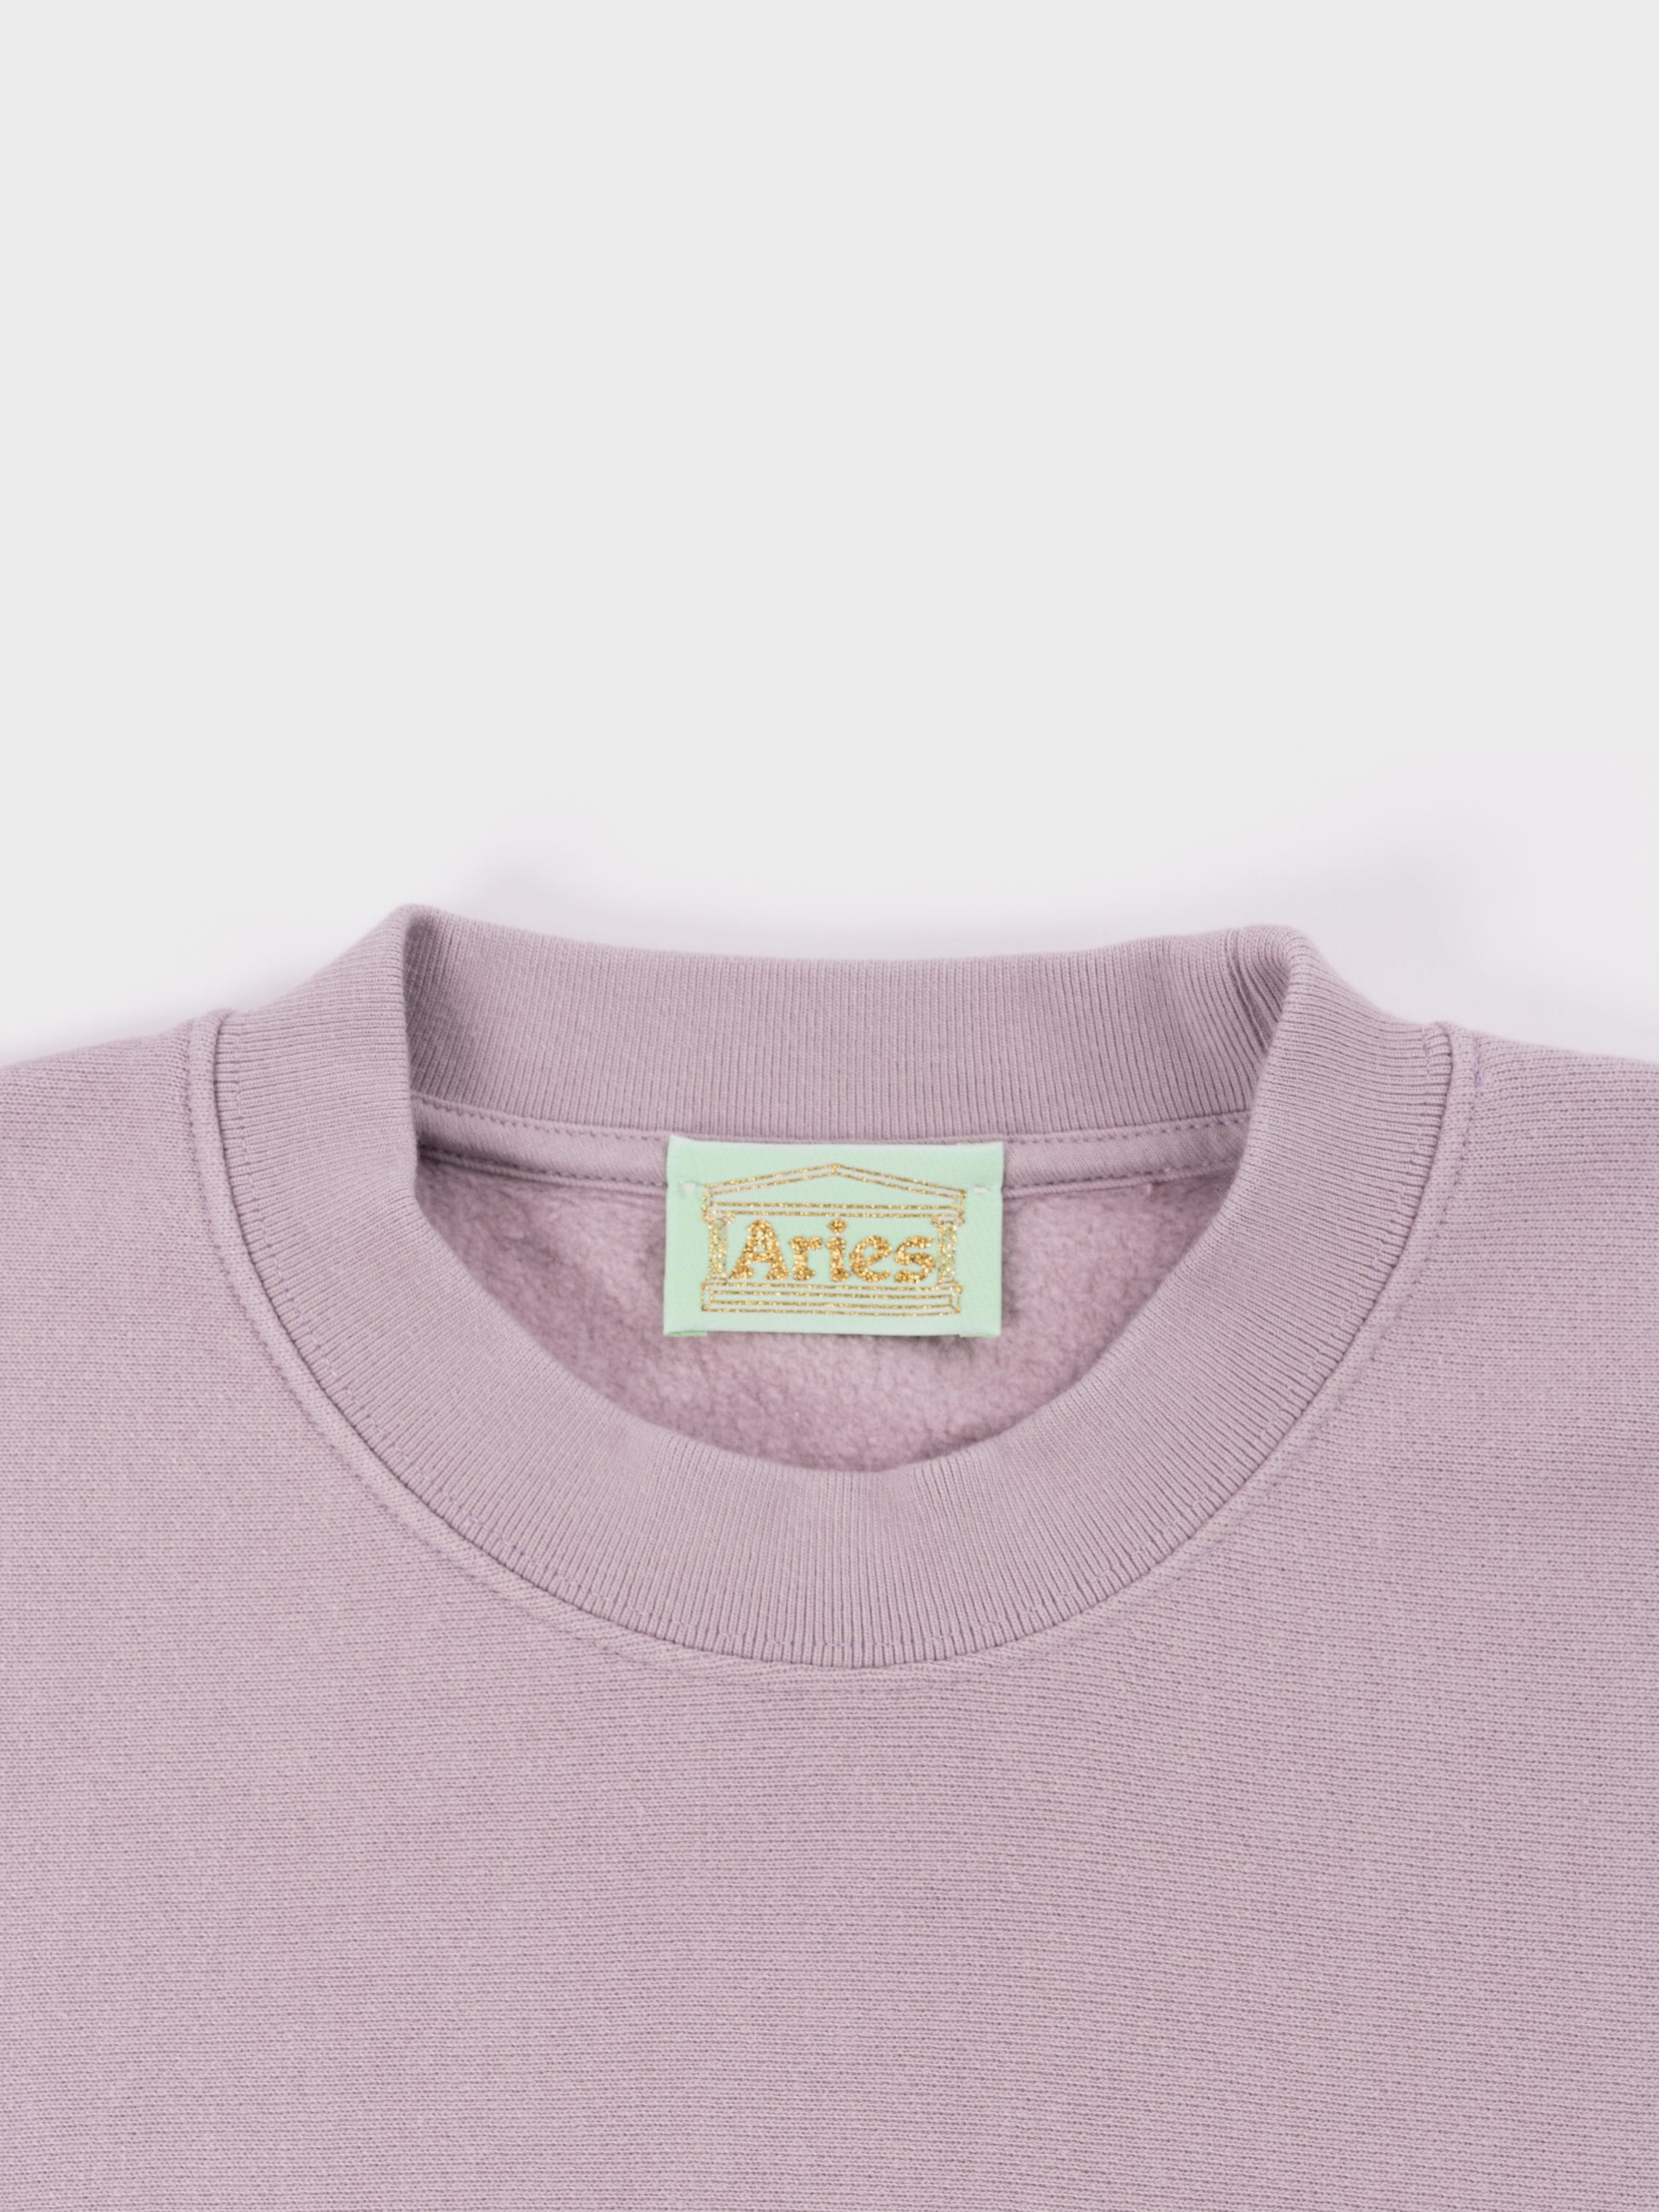 Aries Aged Premium Temple Sweatshirt - Lilac